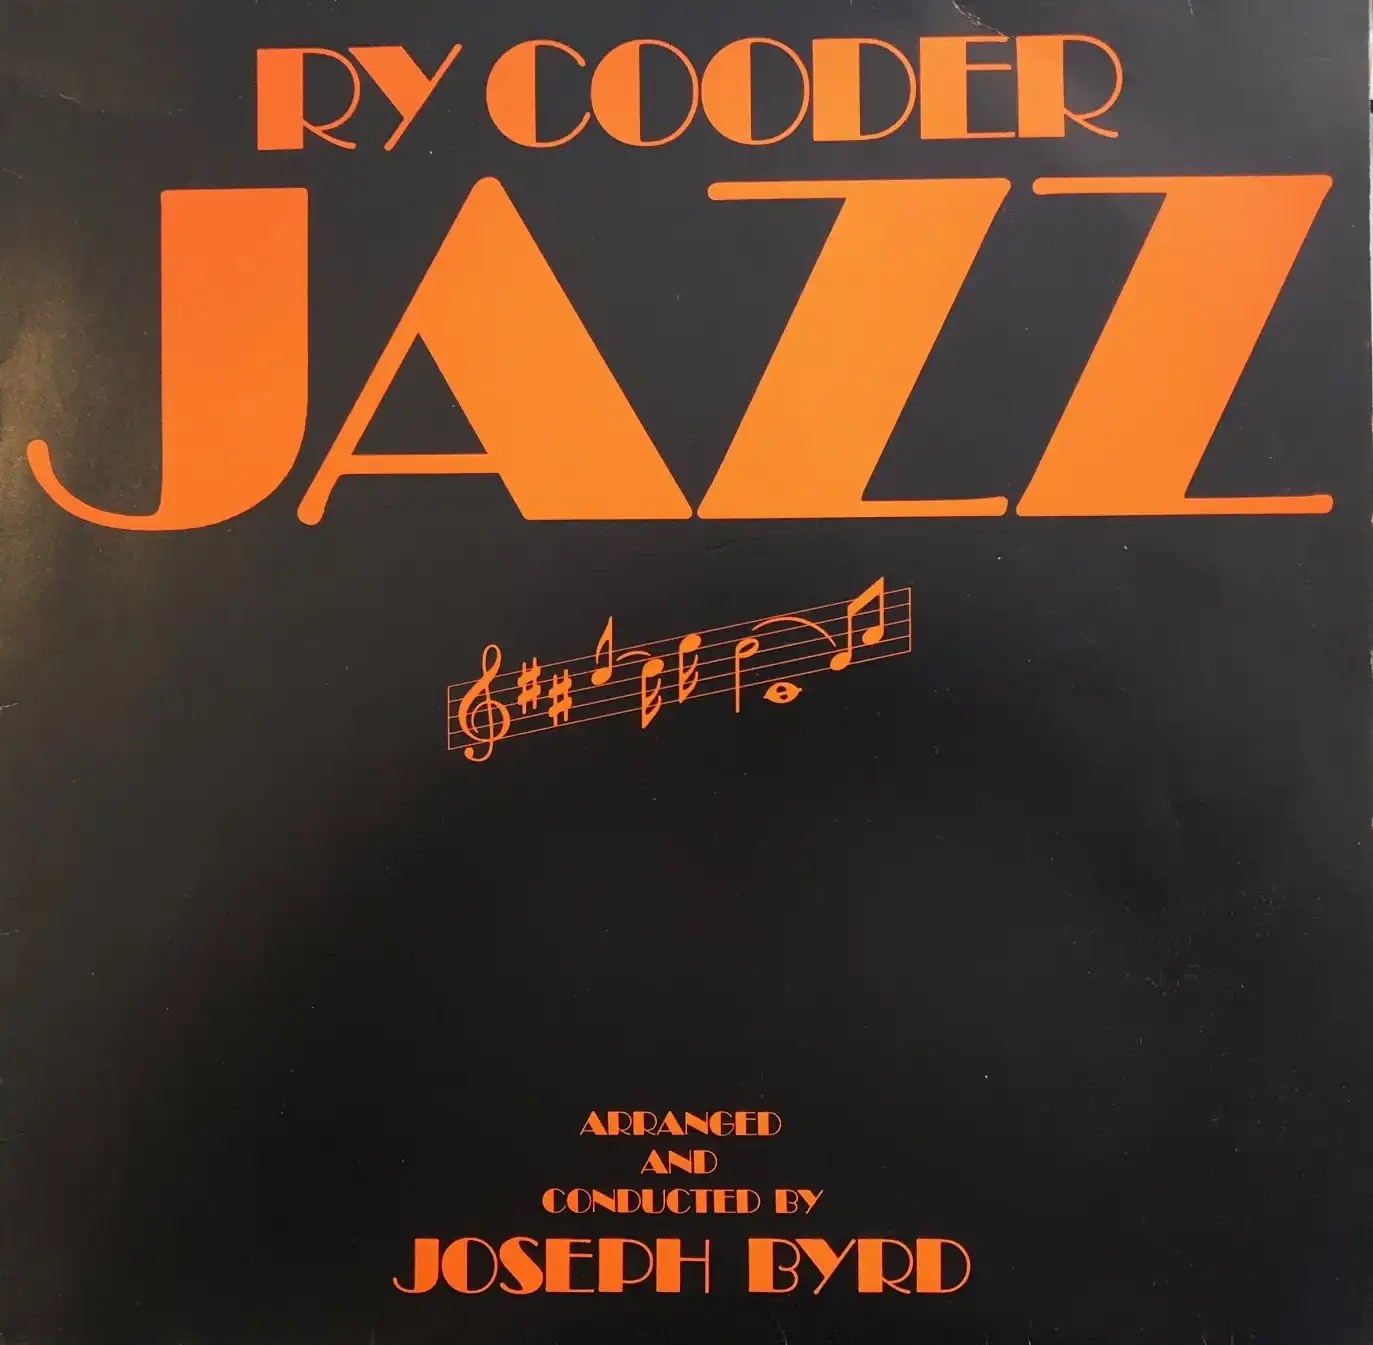 RY COODER / JAZZ